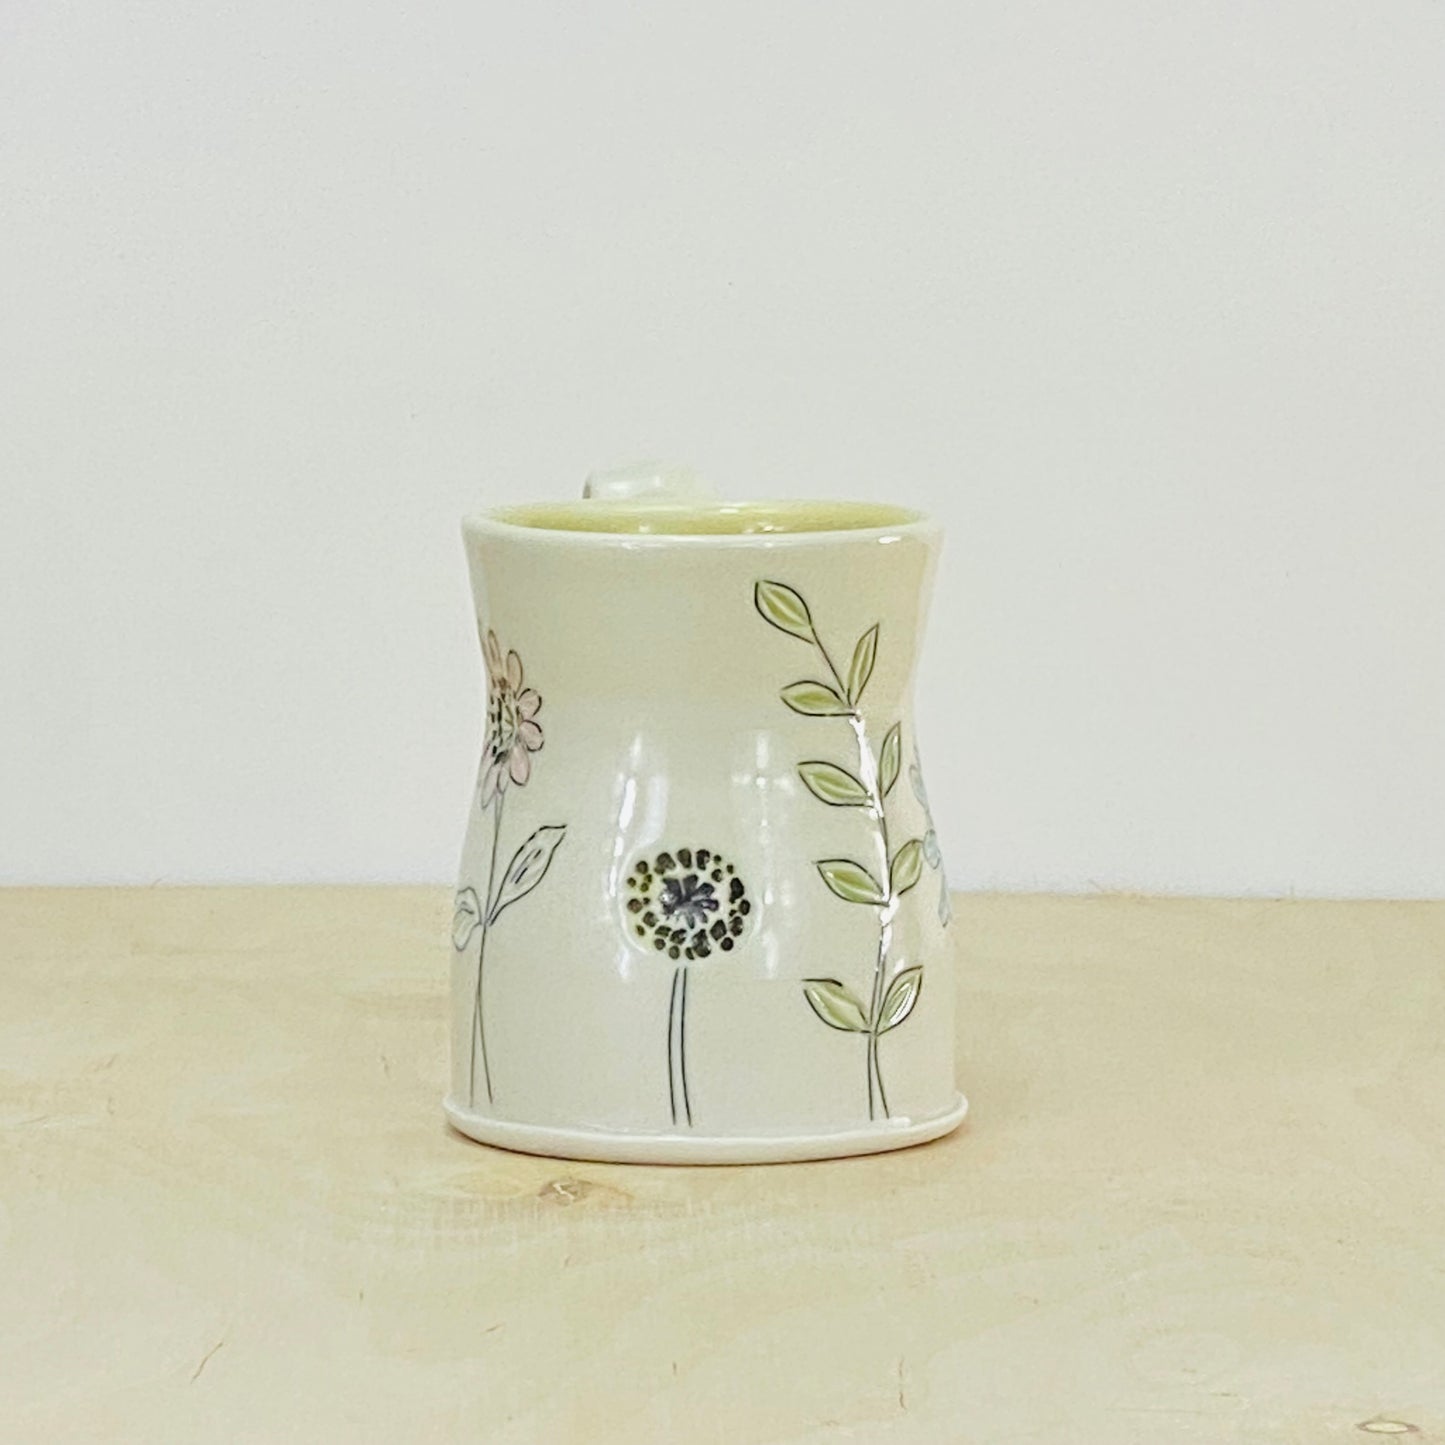 Mug with Flowers6-zinnia/allium